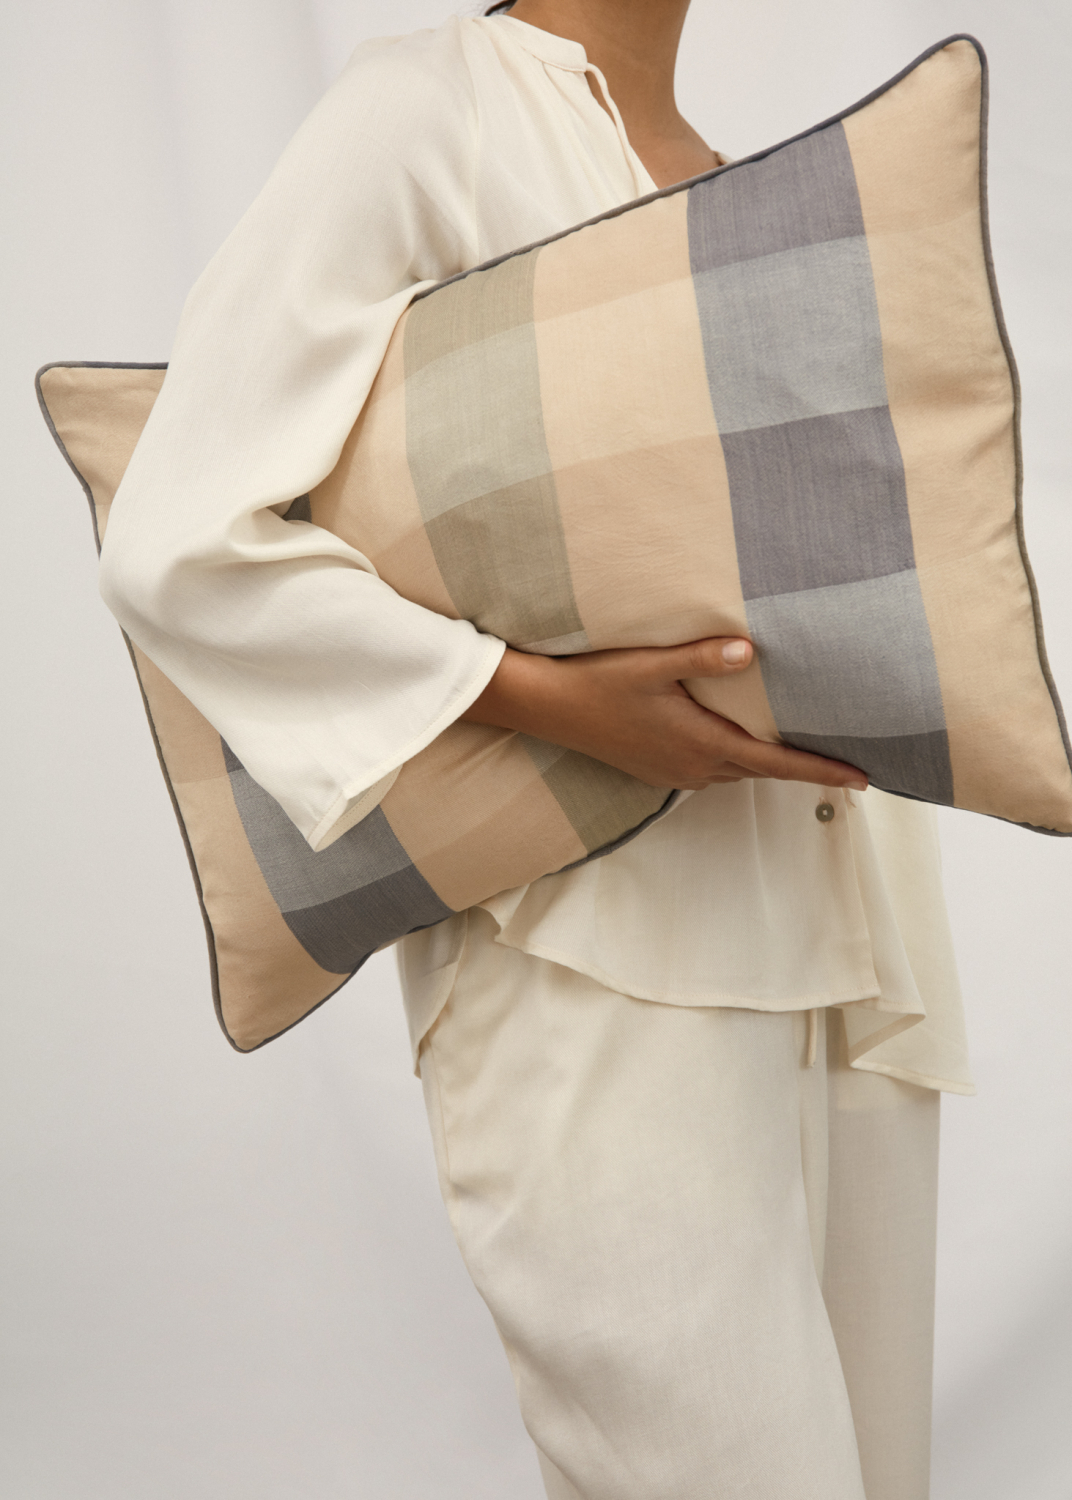 Cushions - Lovely silk cushion